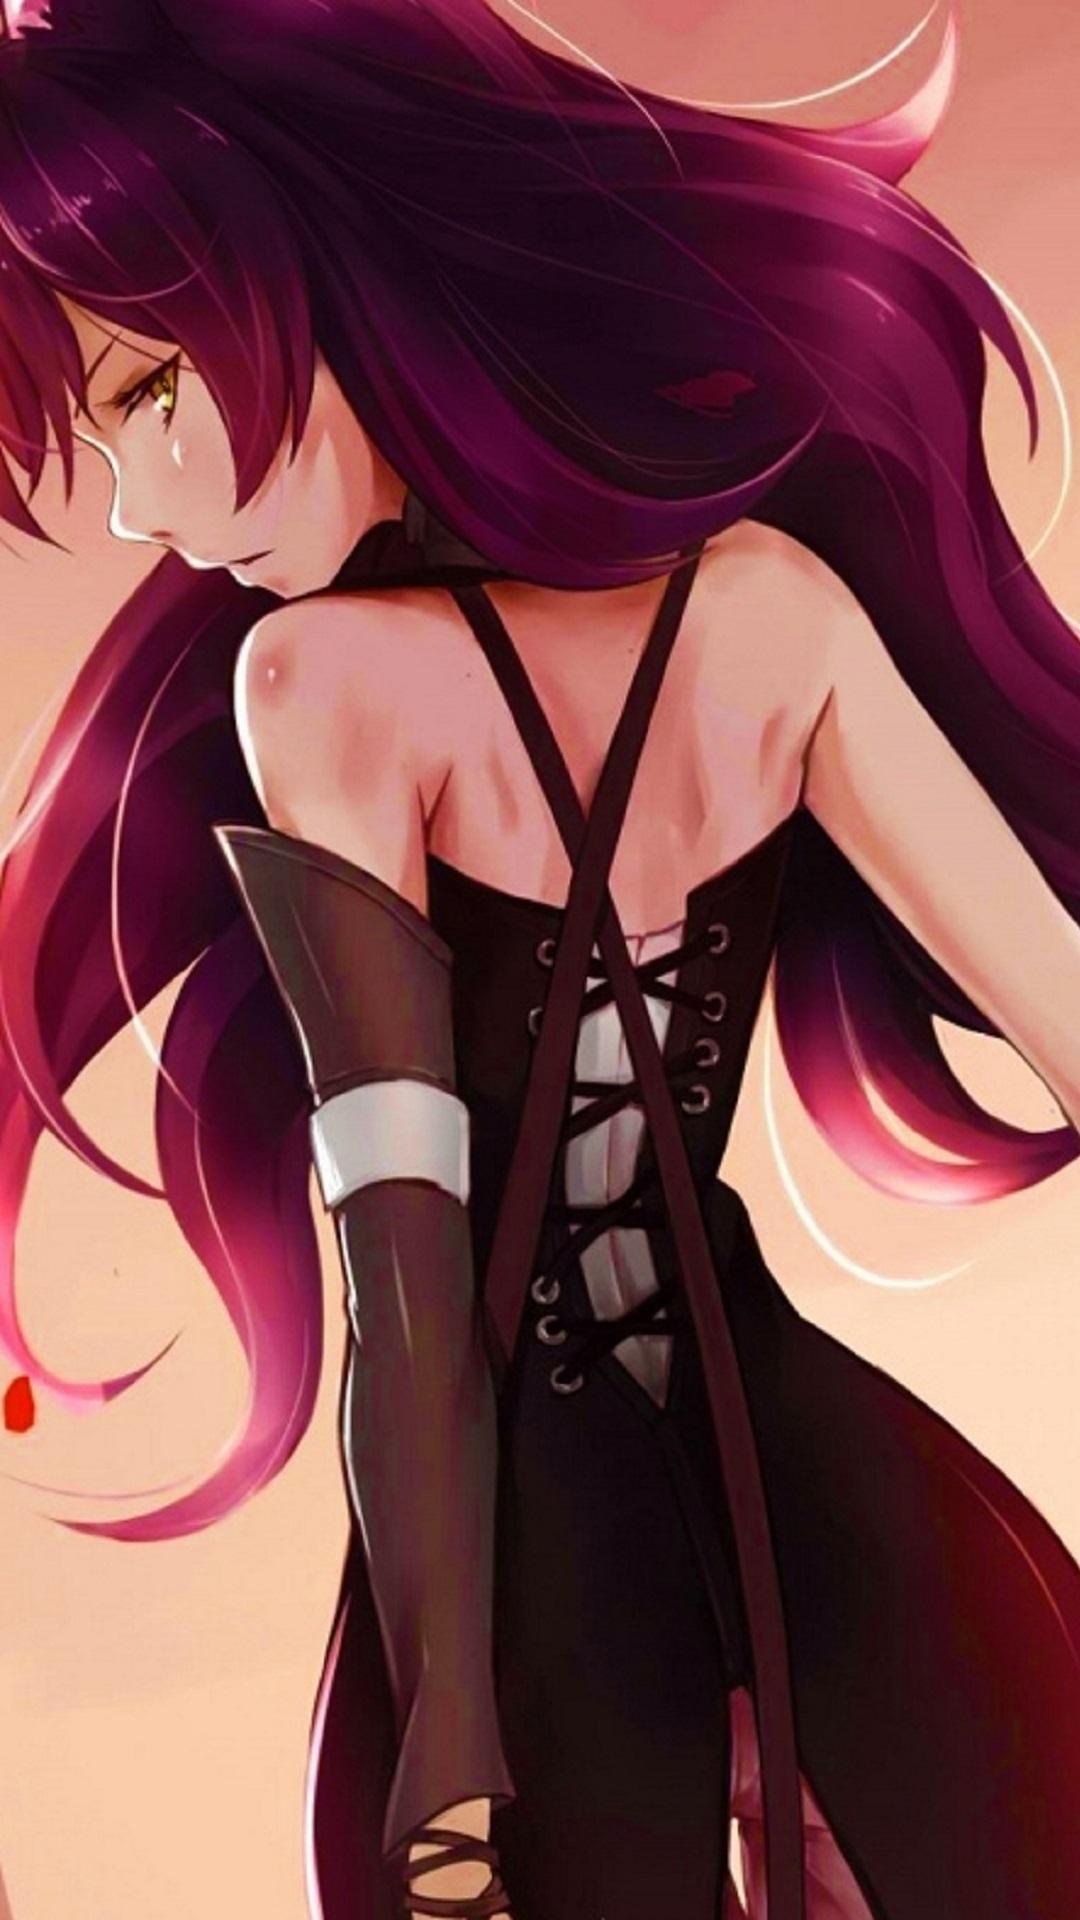 Anime Girl Bikini Wallpapers HD for Android - APK Download